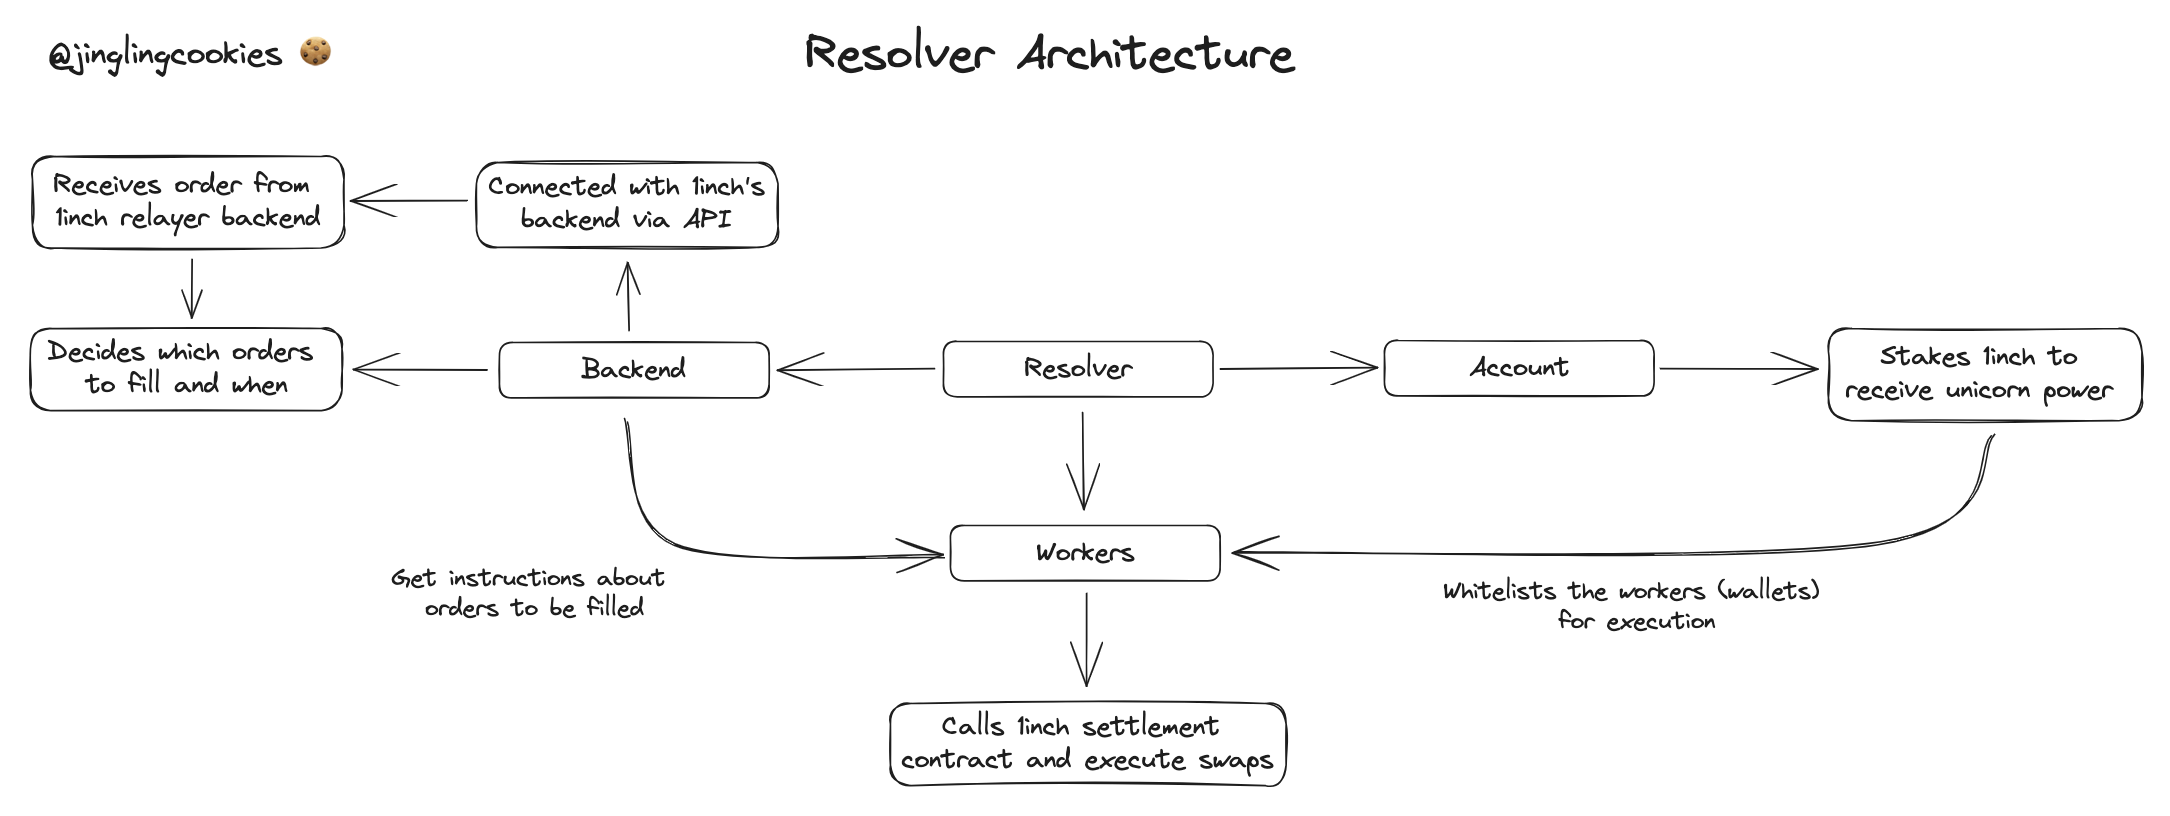 Resolver Architecture